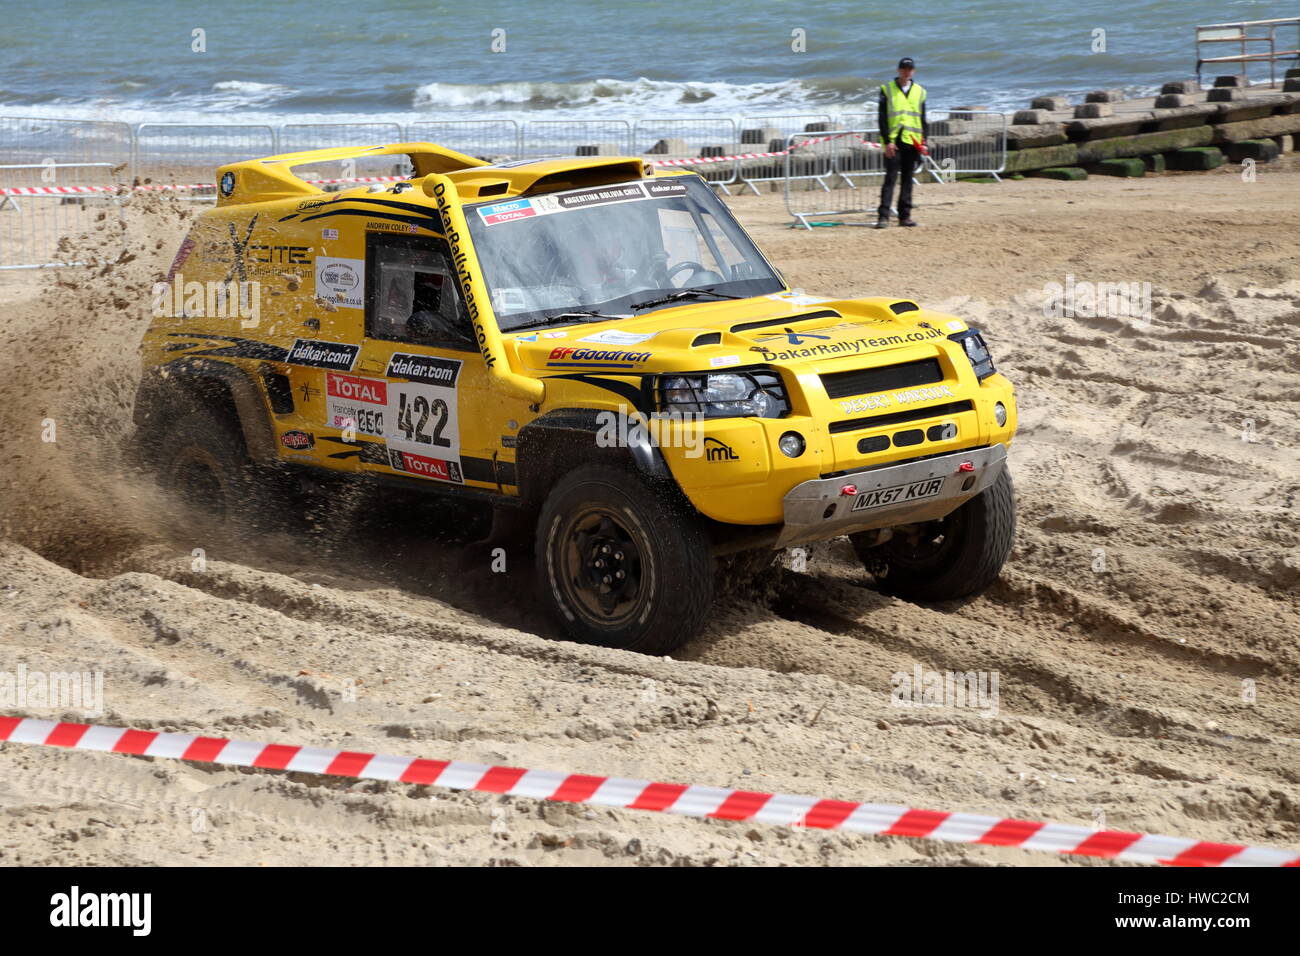 Dakar Rally Team prepared Land Rover Freelander demonstrating racing skills at Bournemouth Wheels Festival 2014 Dorset UK Stock Photo